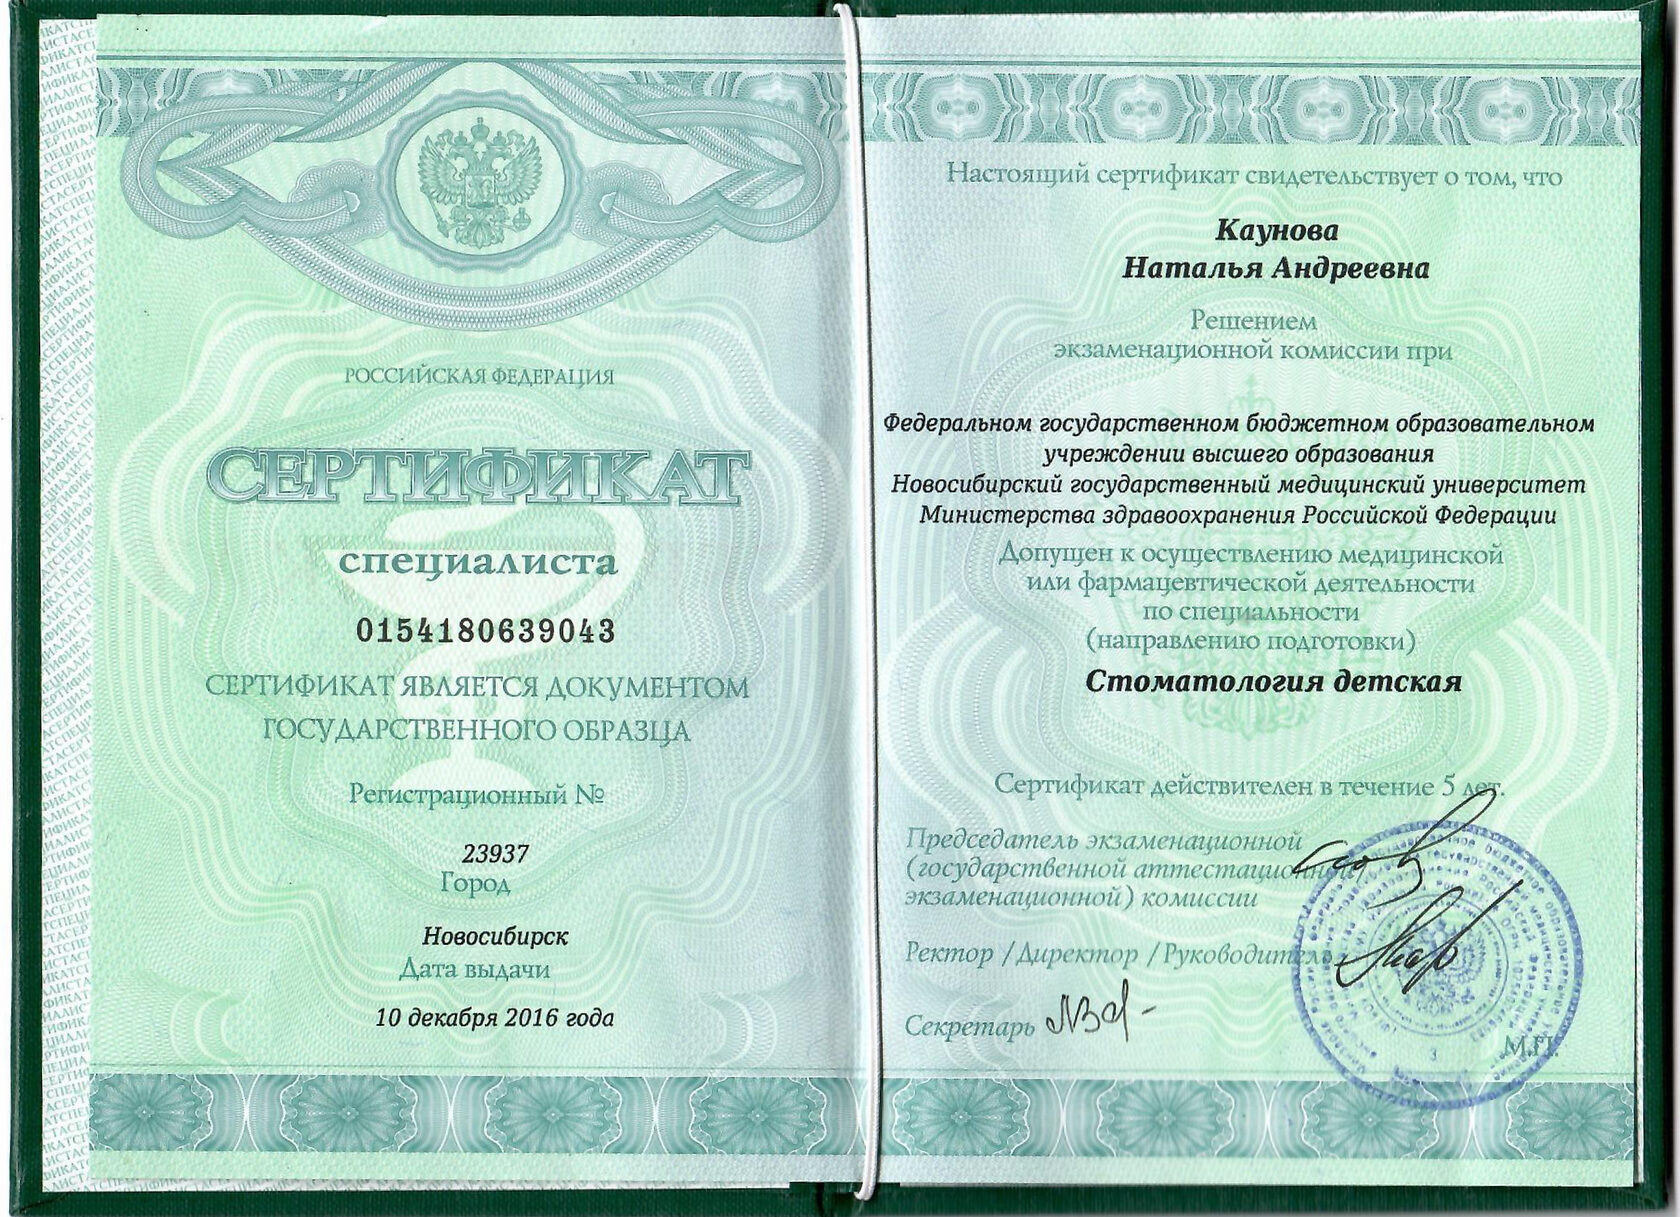 Сертификат специалиста ординатура